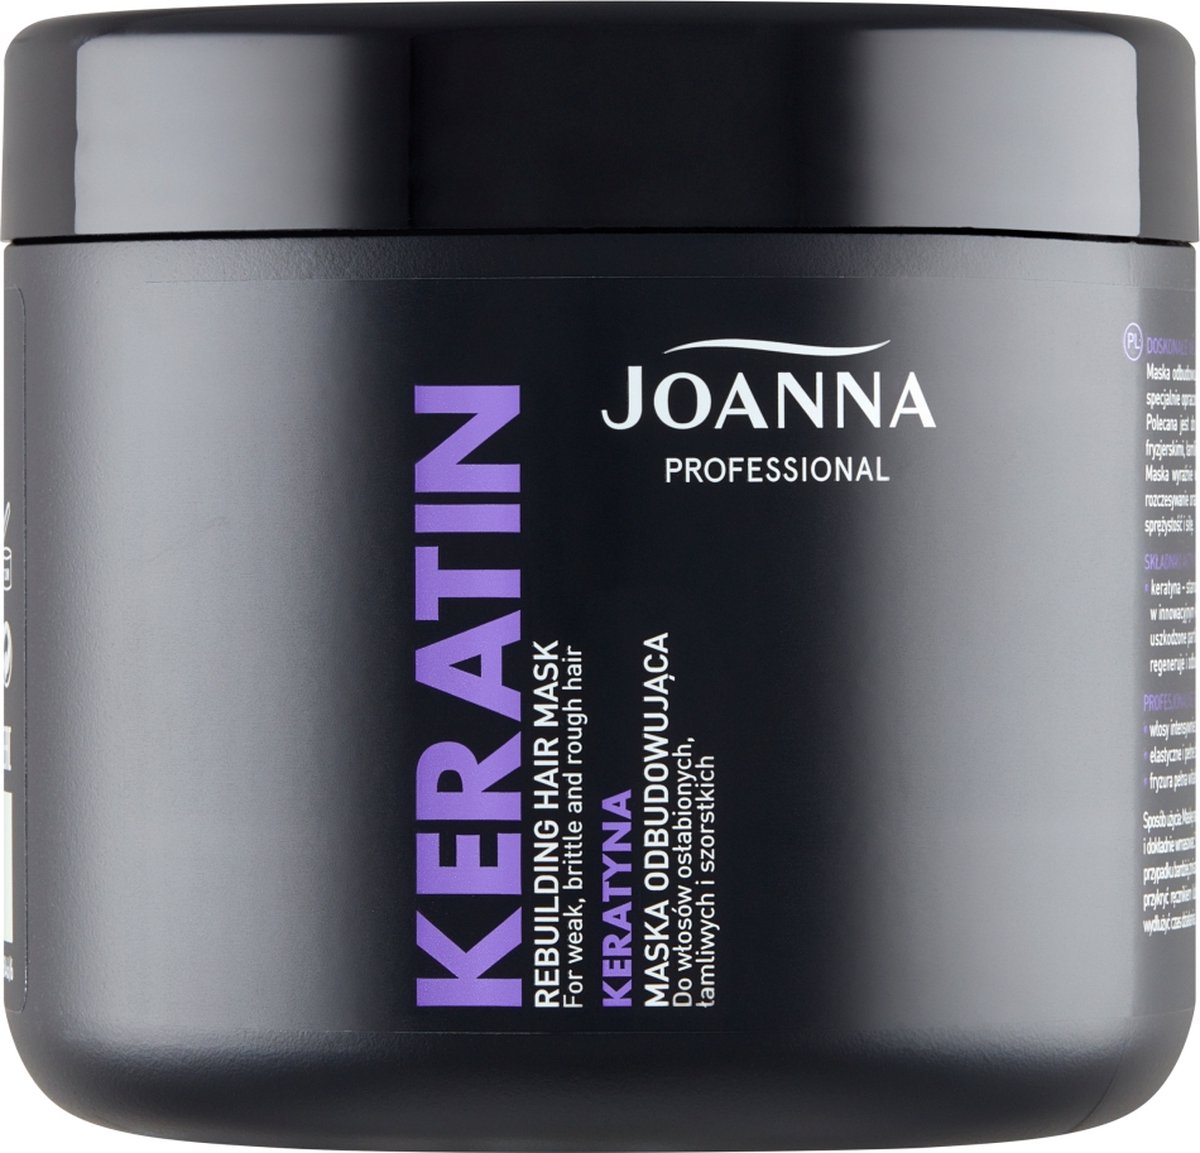 Joanna Professional - Keratin Rebuilding Hair Restoring Mask For Hair Weakened From Keratin 500G